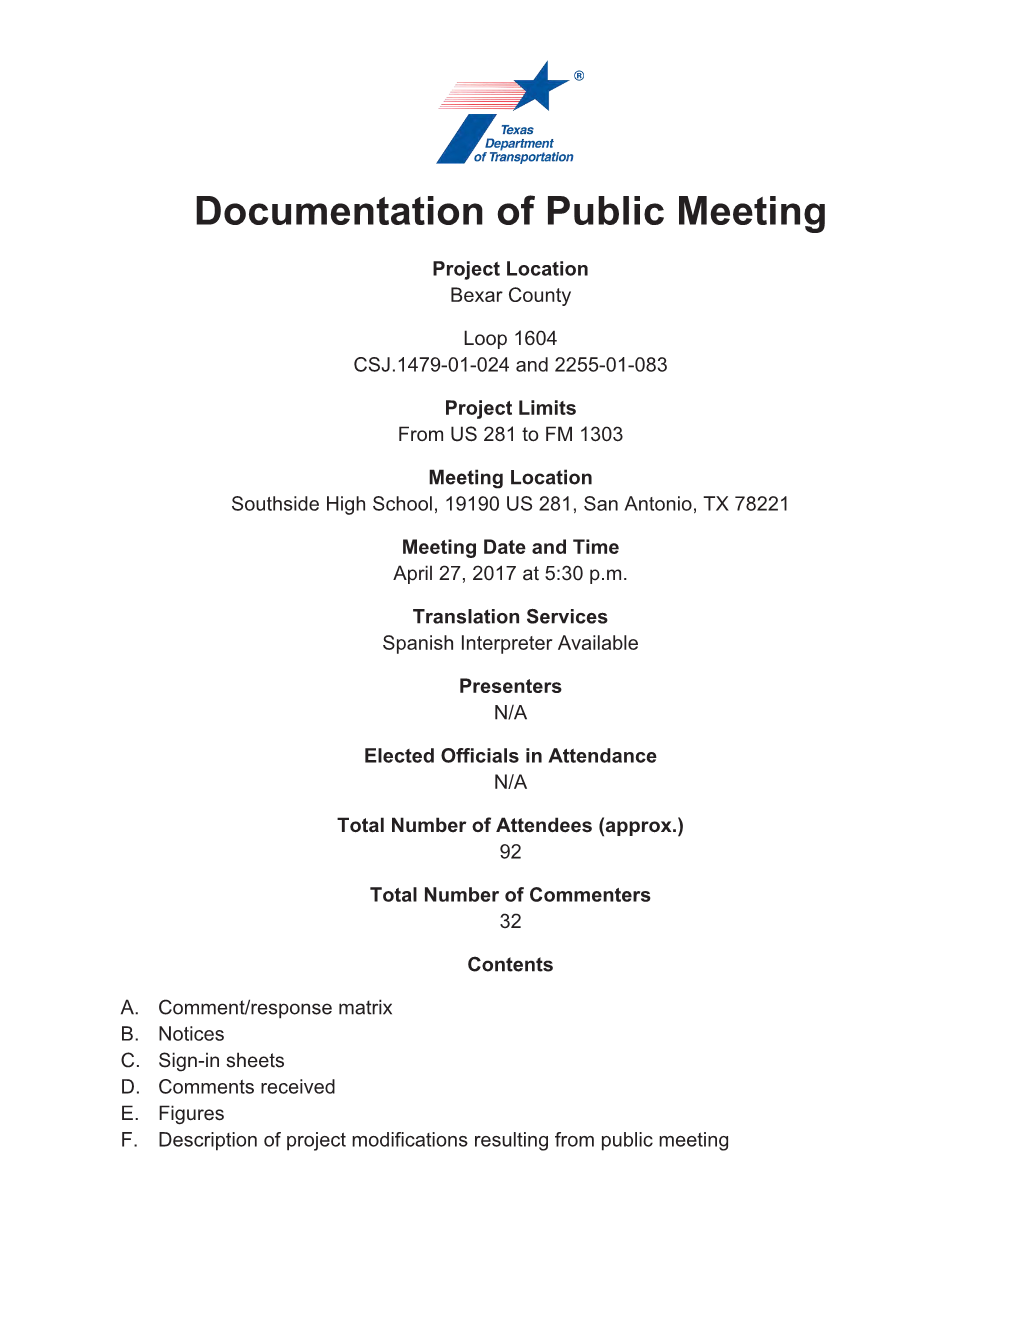 Public Meeting Summary